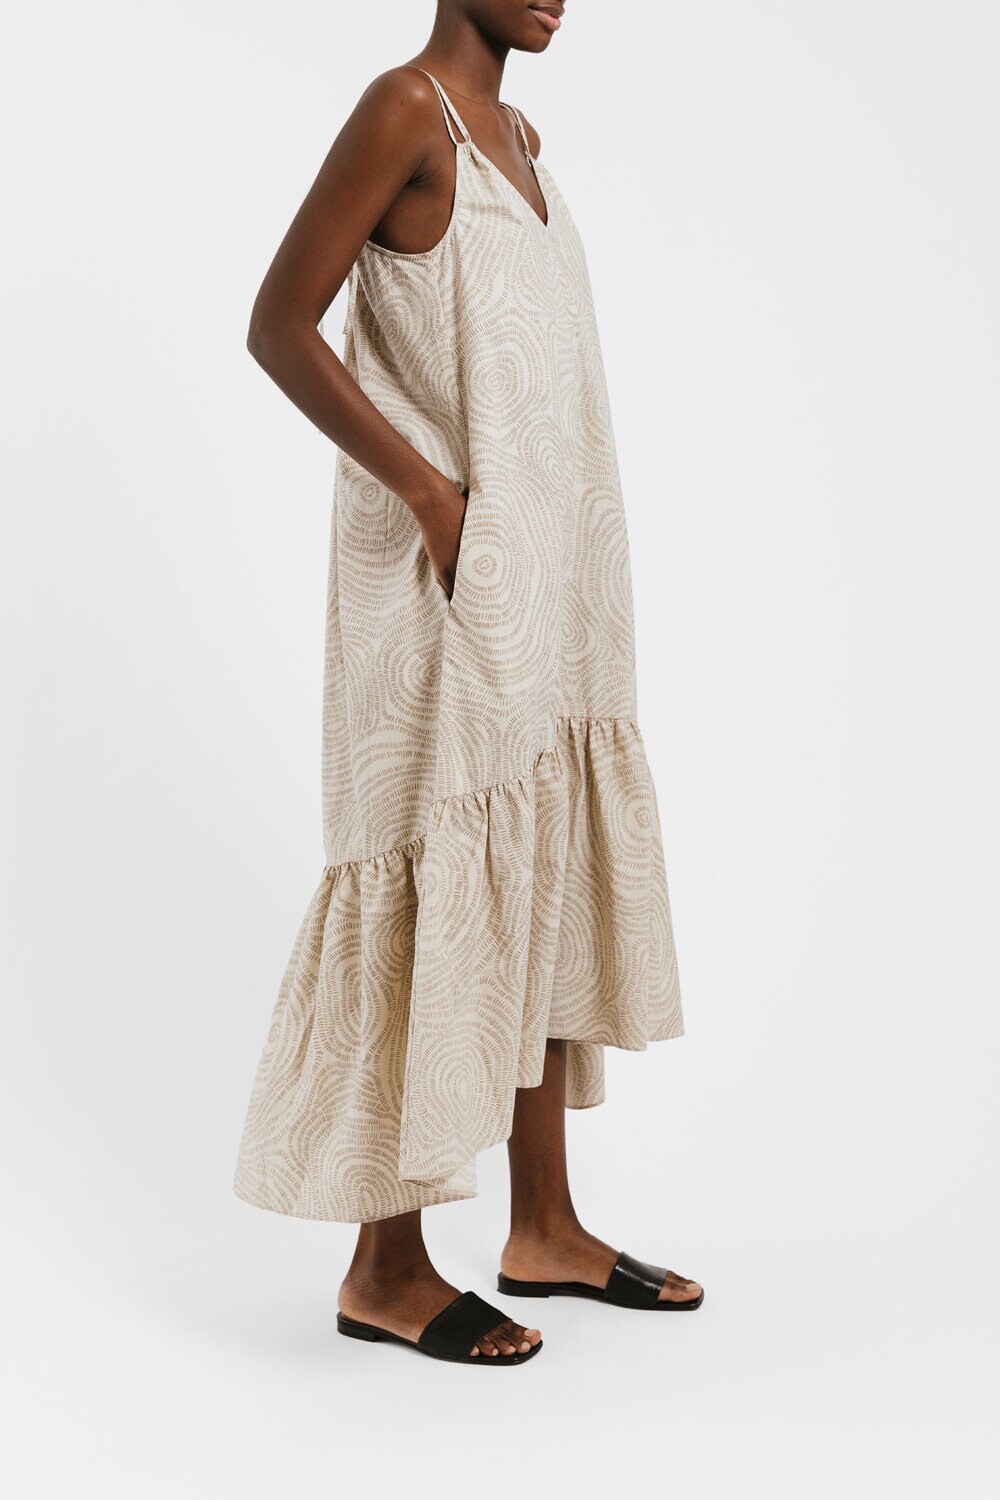 Amela Print Dress